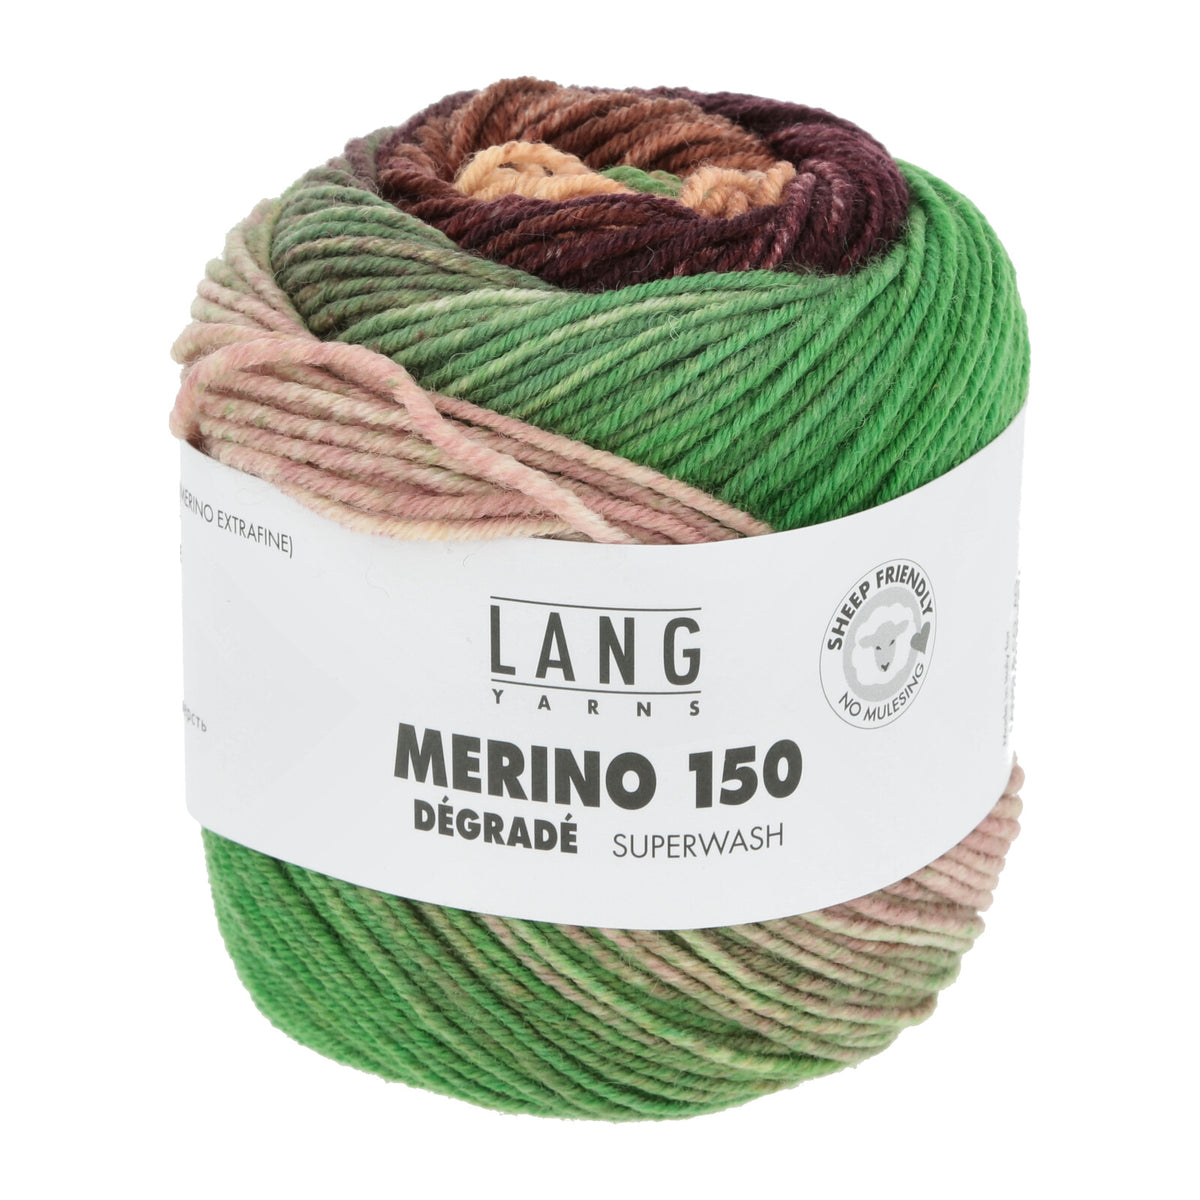 Lang Merino 150 Dégradé - Rainbow - CAST ON! CAST OFF!